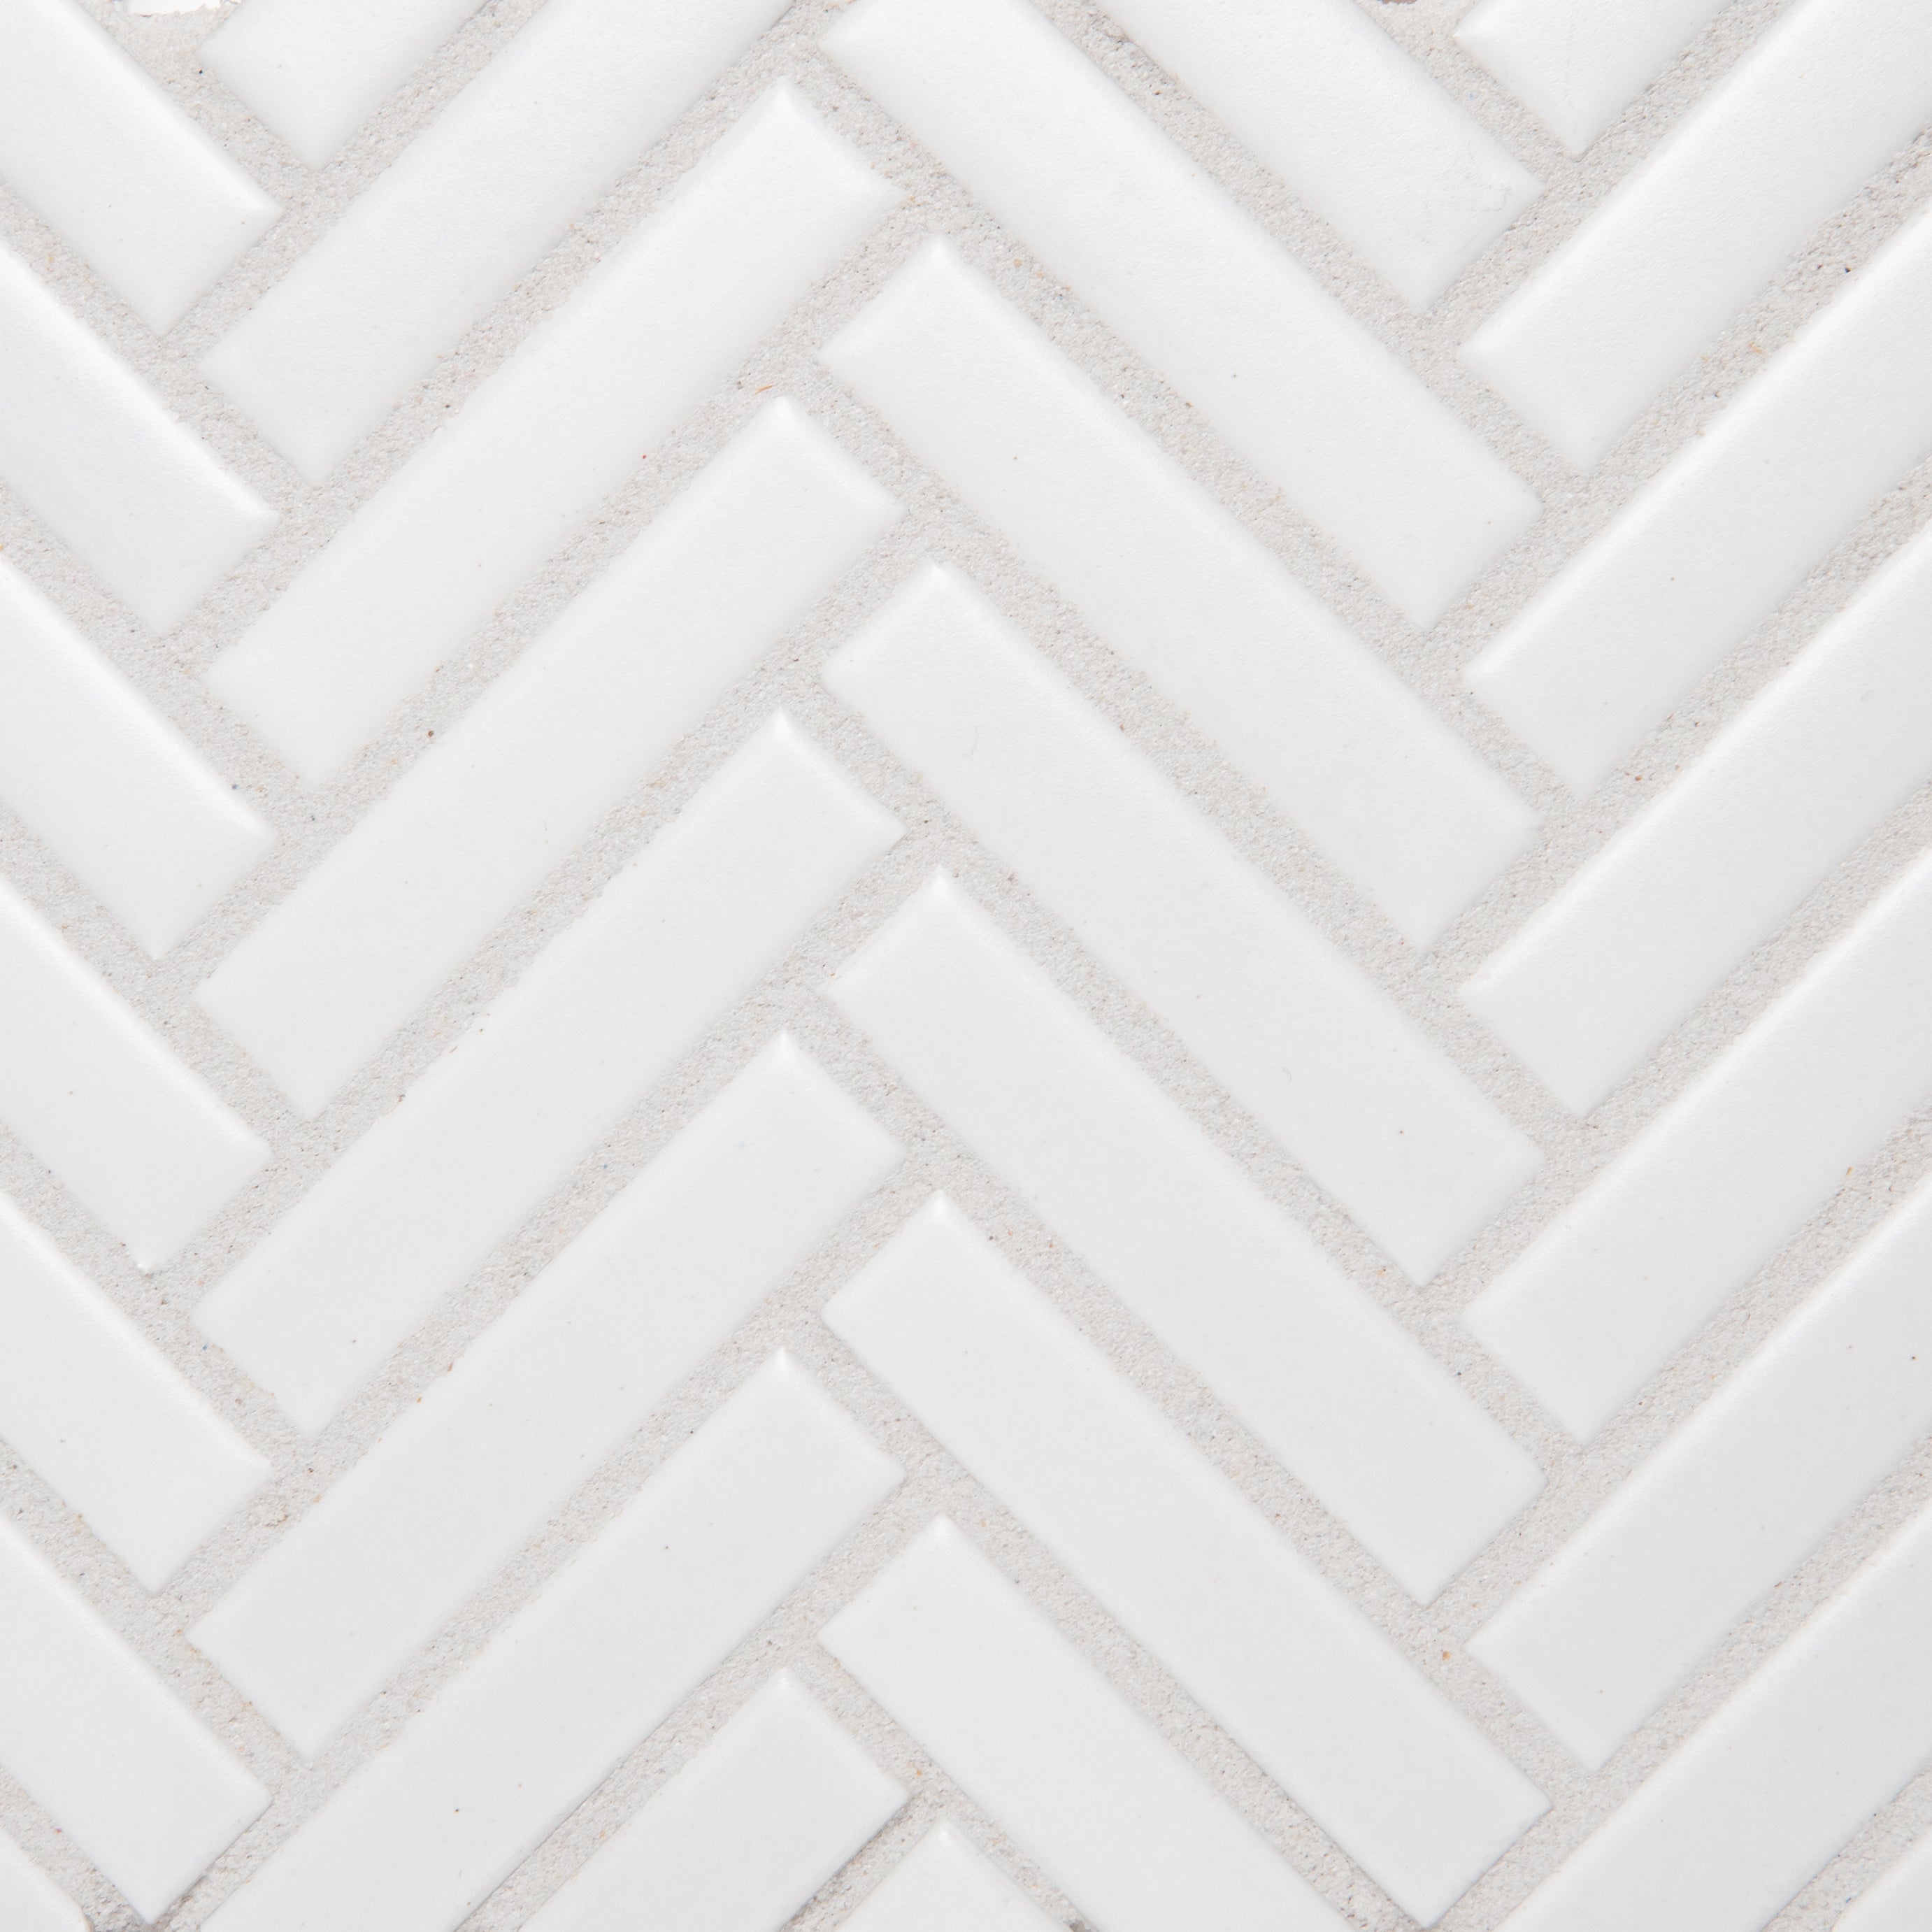 Makai Herringbone 3/8 X 2 White Matte Mosaic Tile